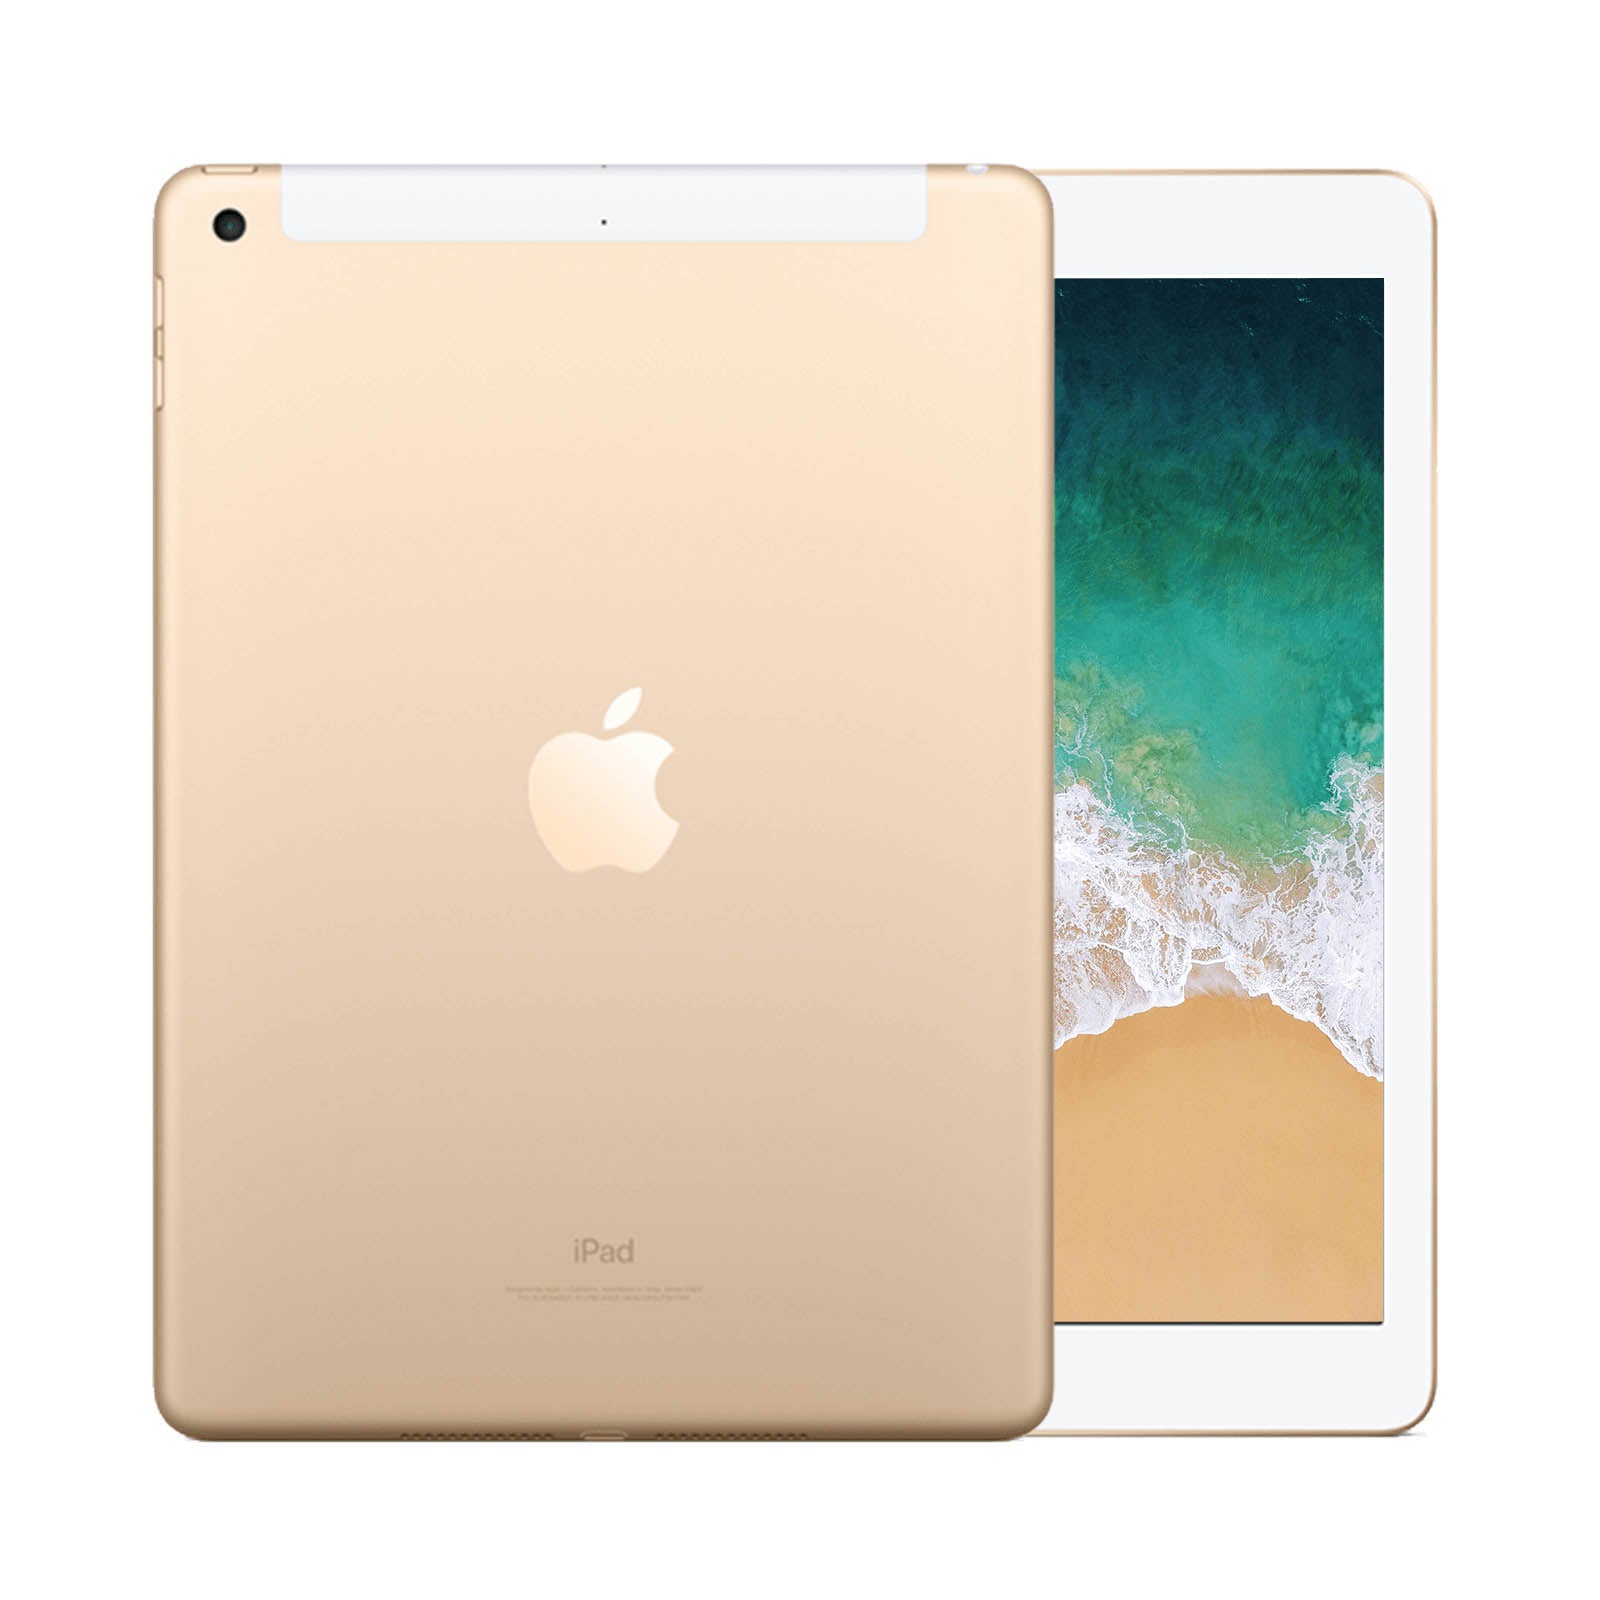 Apple iPad Air 2 128GB WiFi Gold Gut